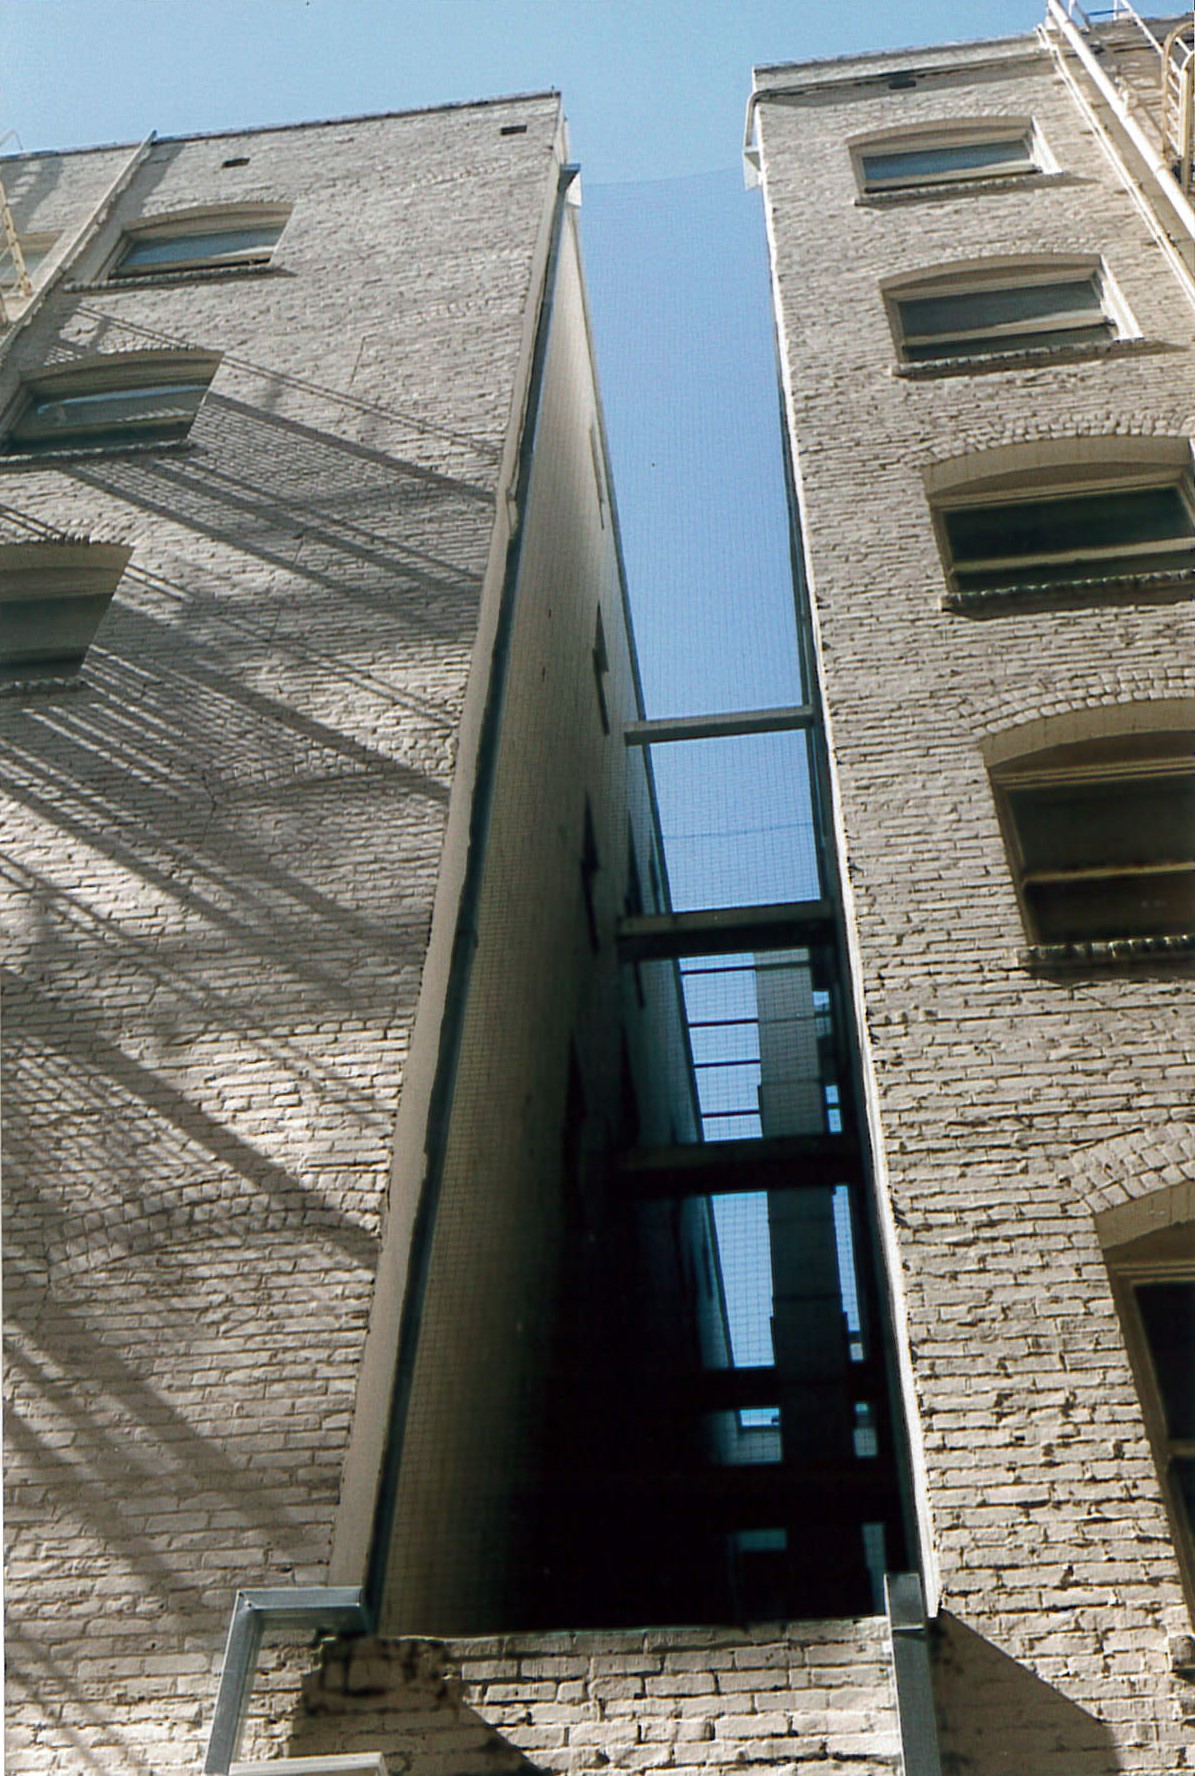 Lightwell, structural reinforcement in north facade